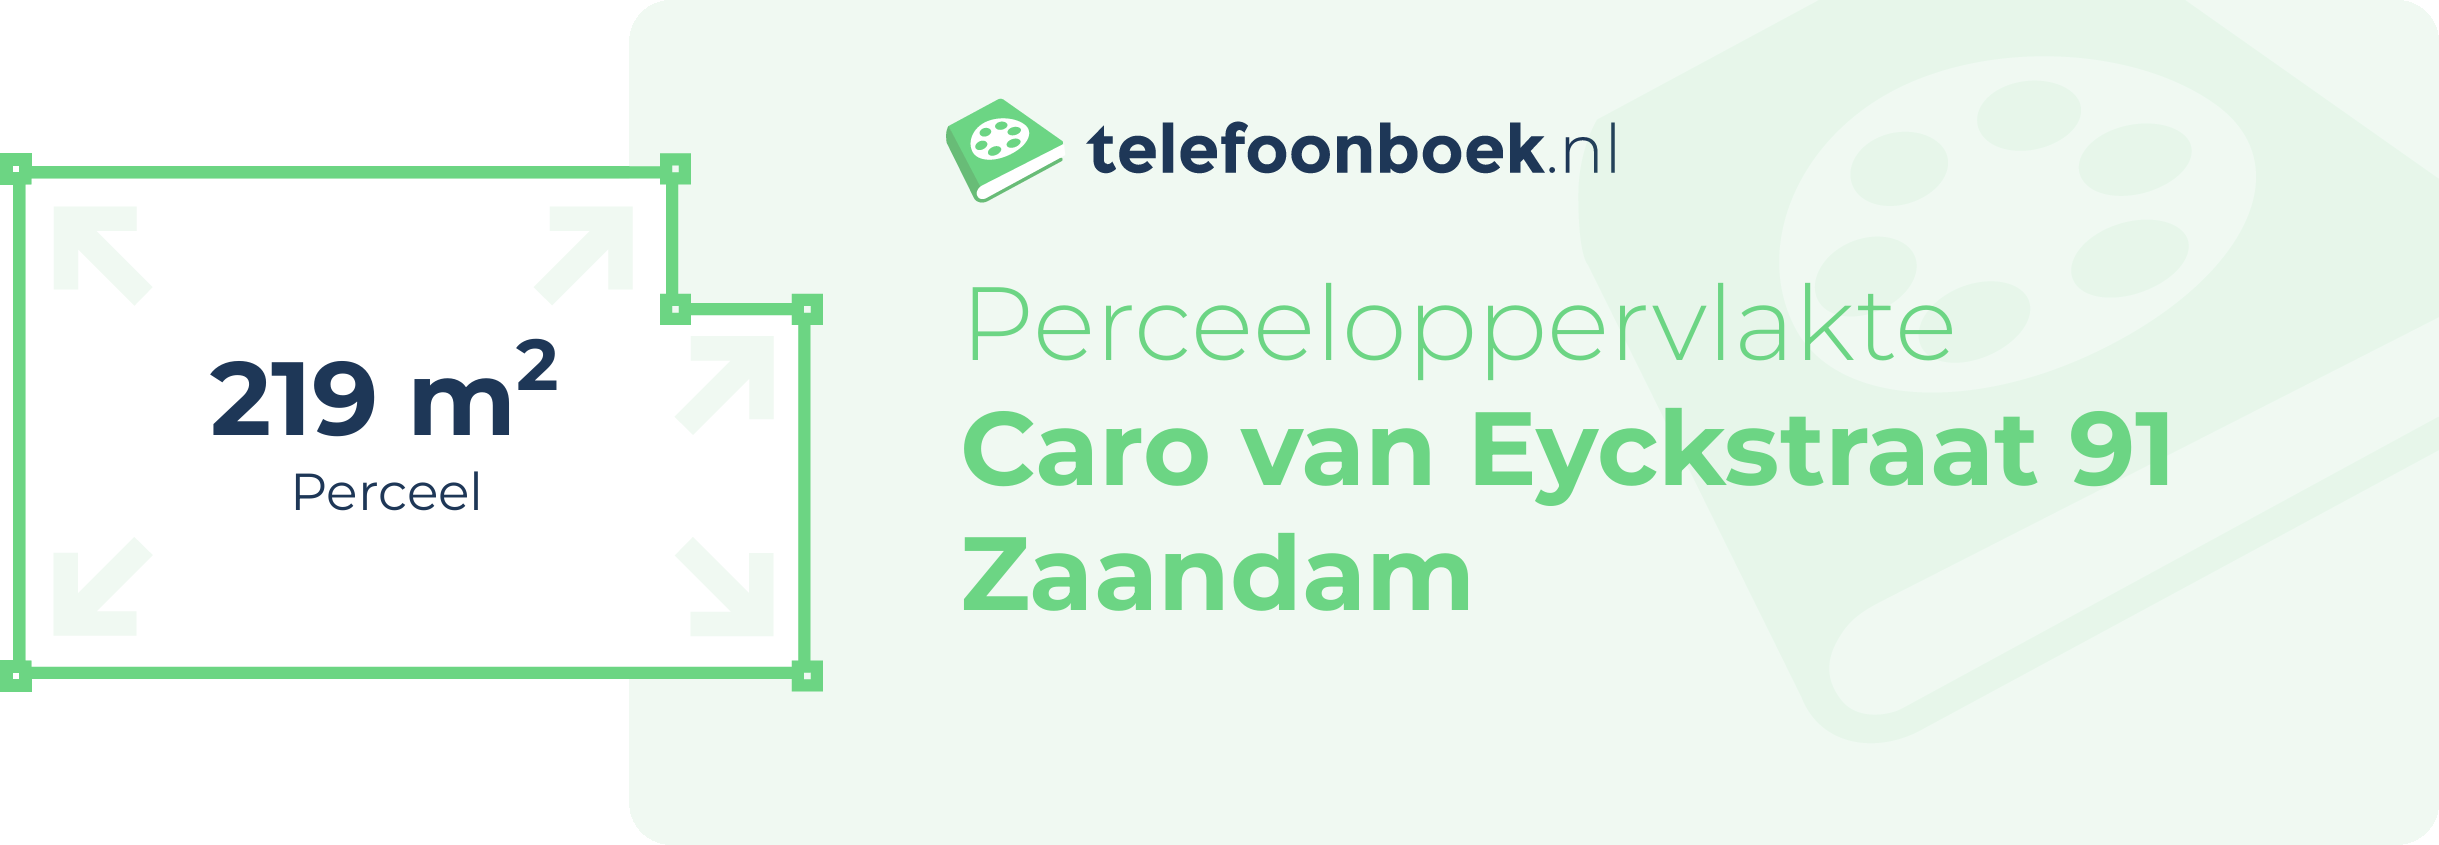 Perceeloppervlakte Caro Van Eyckstraat 91 Zaandam